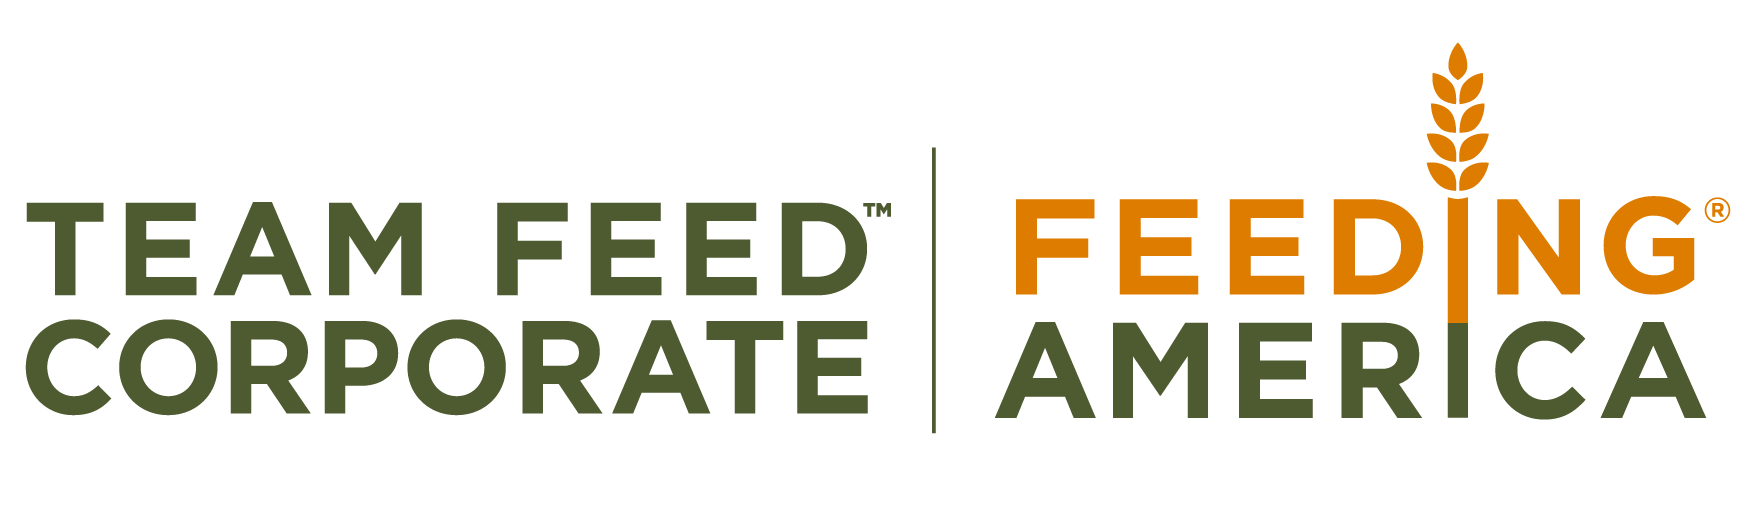 Team Feed Corporate | Feeding America